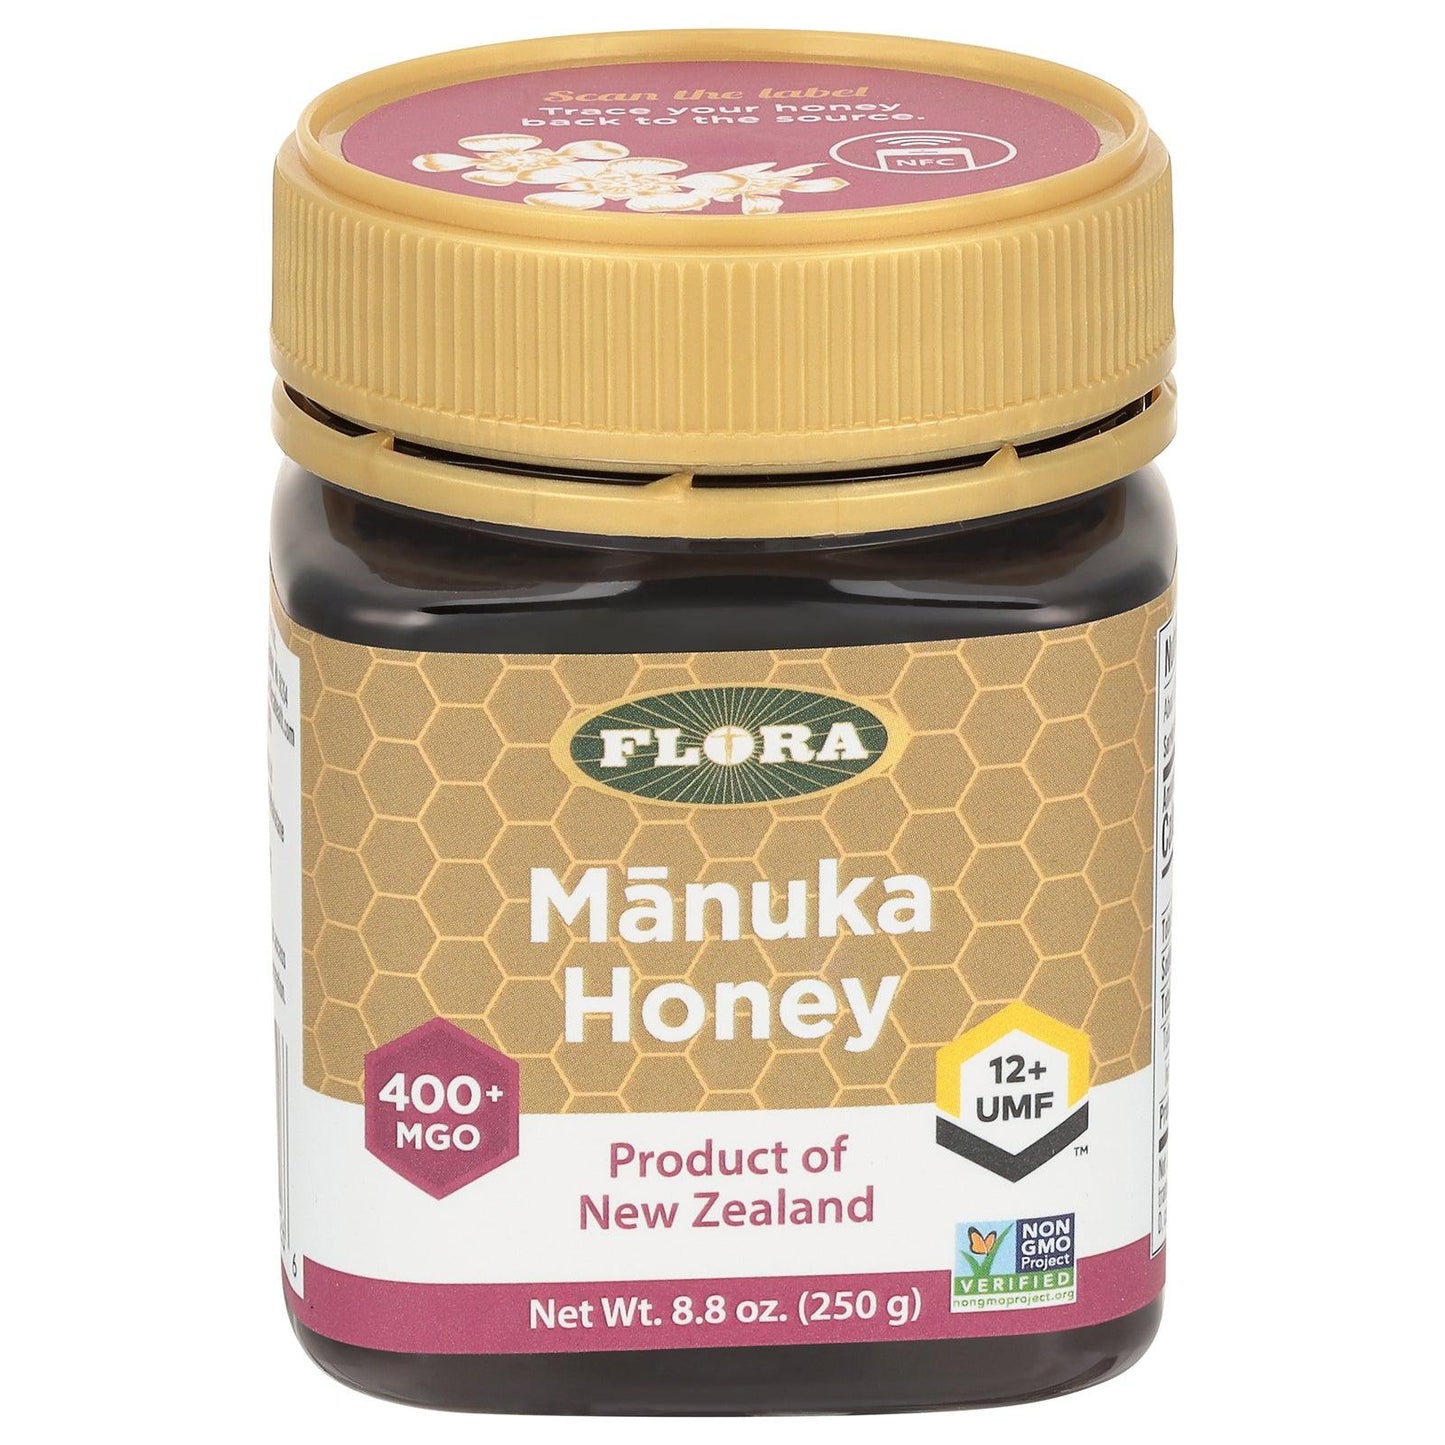 Flora - Manuka Honey Mgo 400+/12+ U - 1 Each-8.8 Fz - Loomini